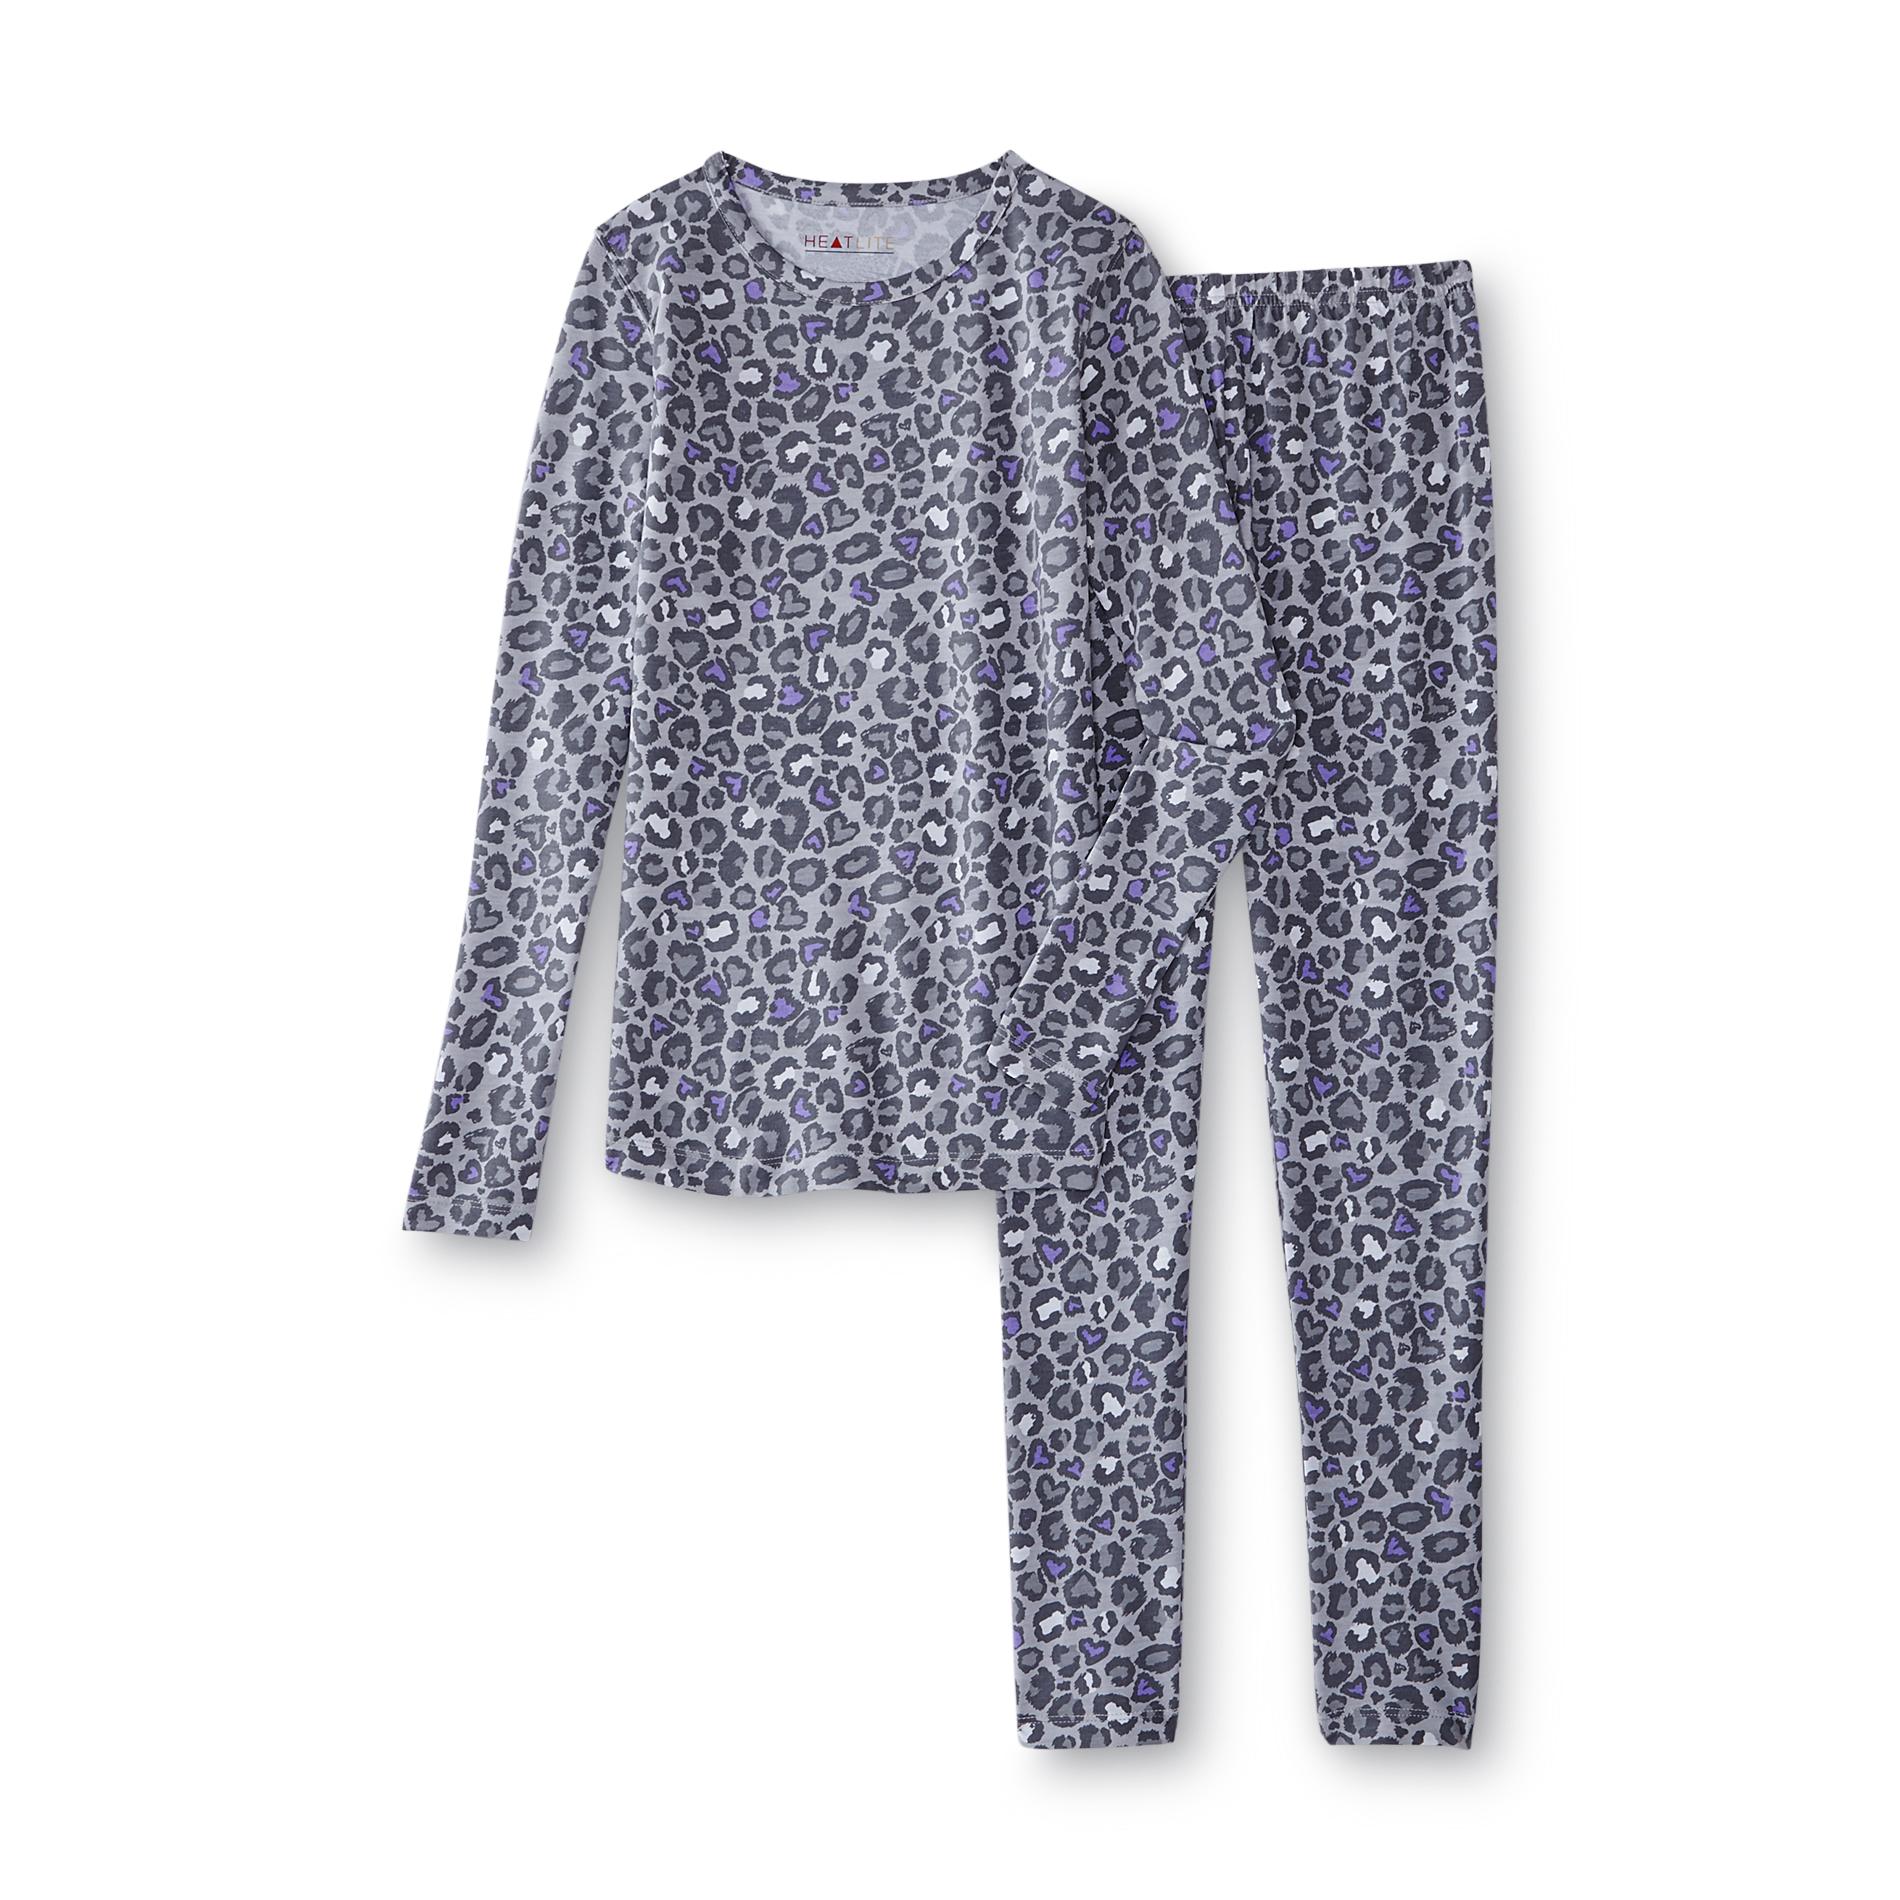 Girl's Thermal Shirt & Pants - Leopard Print